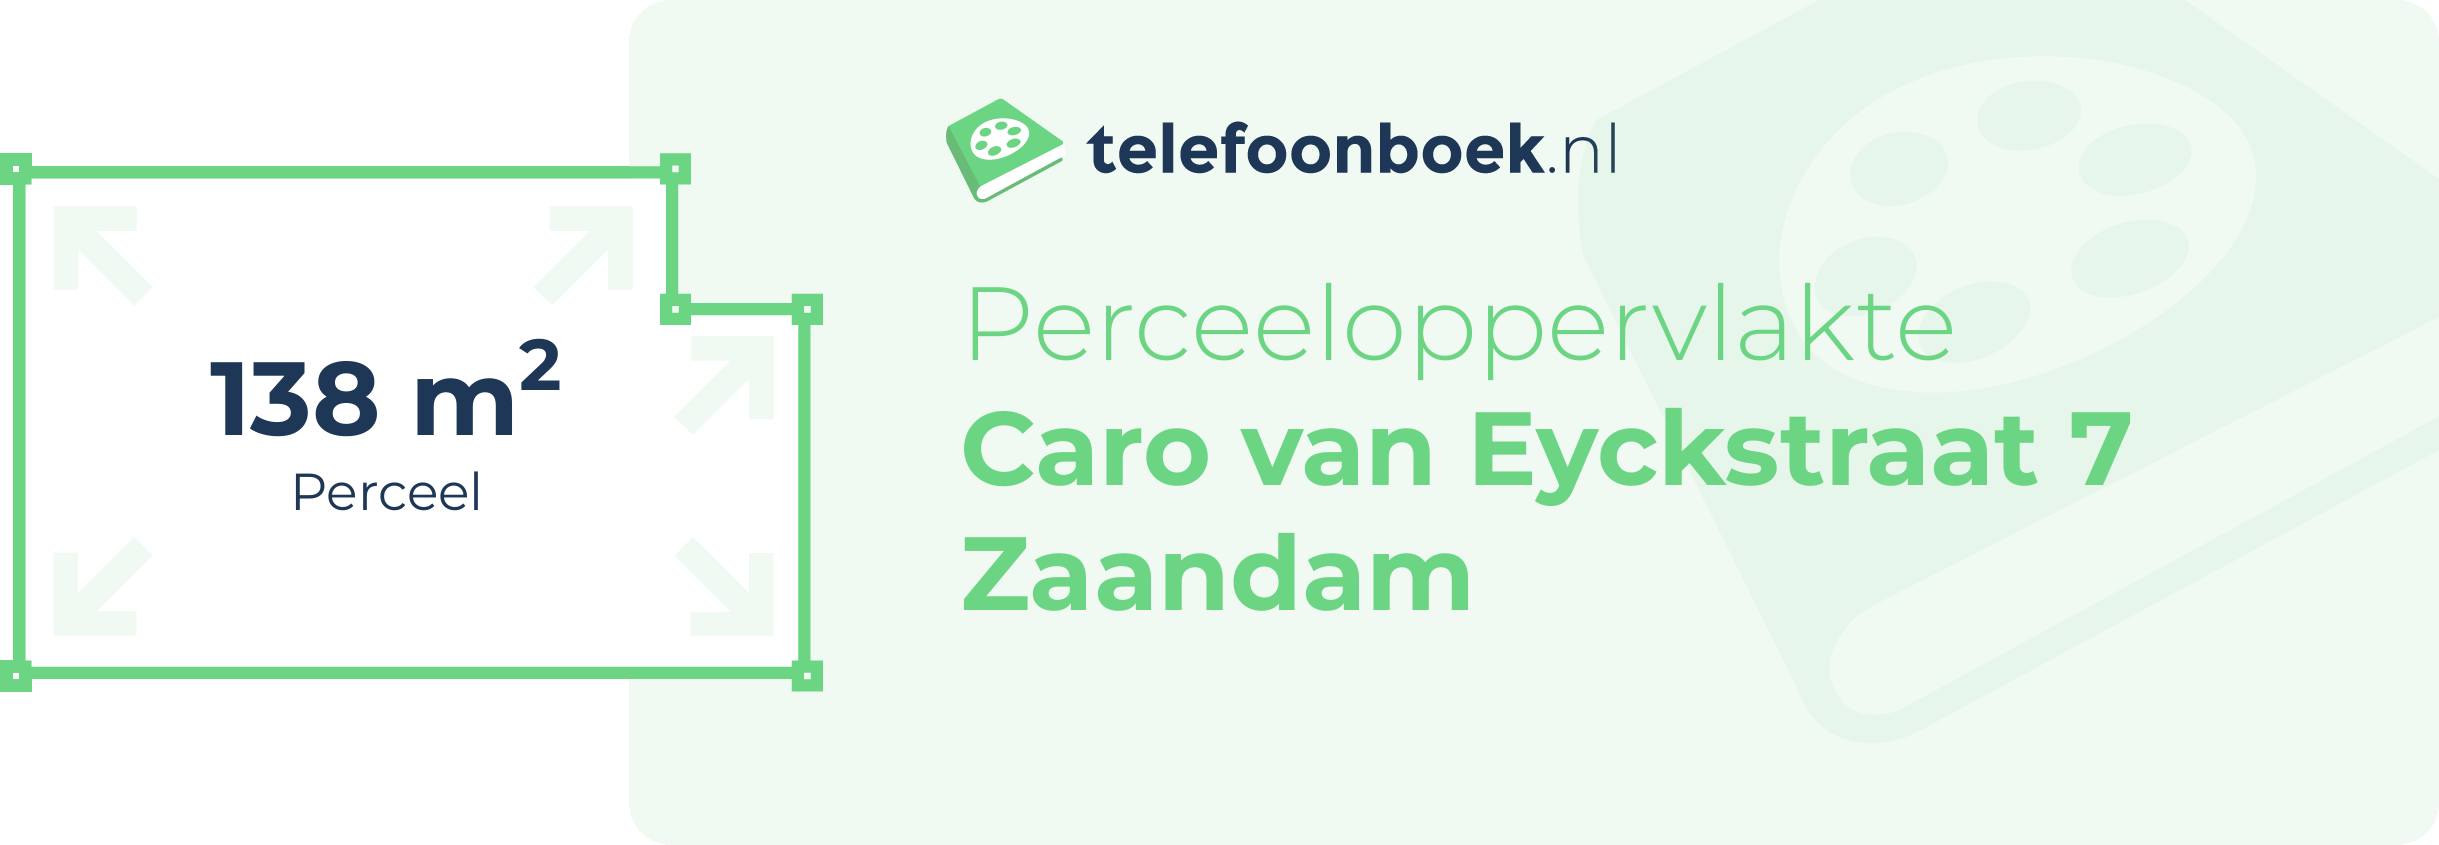 Perceeloppervlakte Caro Van Eyckstraat 7 Zaandam